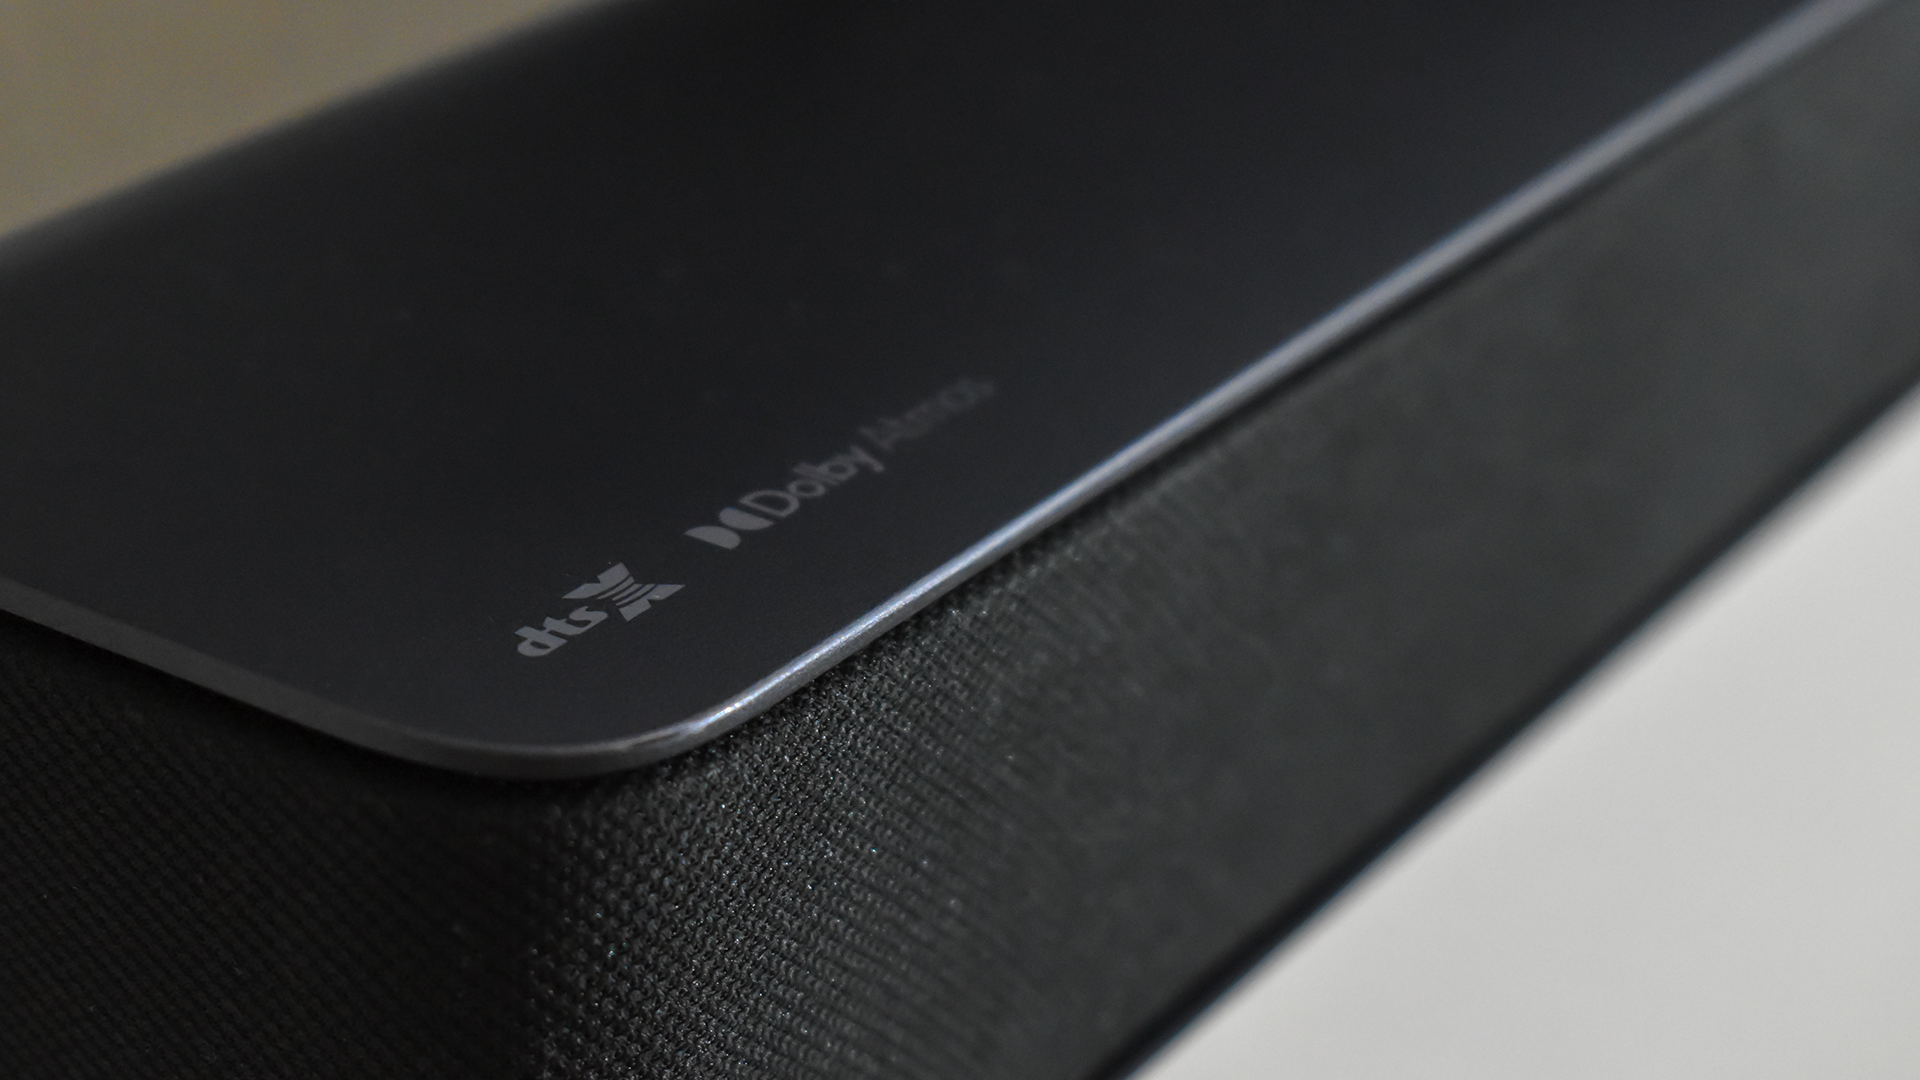 VIZIO M-Series 2.1 Premium Sound Bar with Dolby Atmos, DTS:X, Wireless  Subwoofer M215a-J6